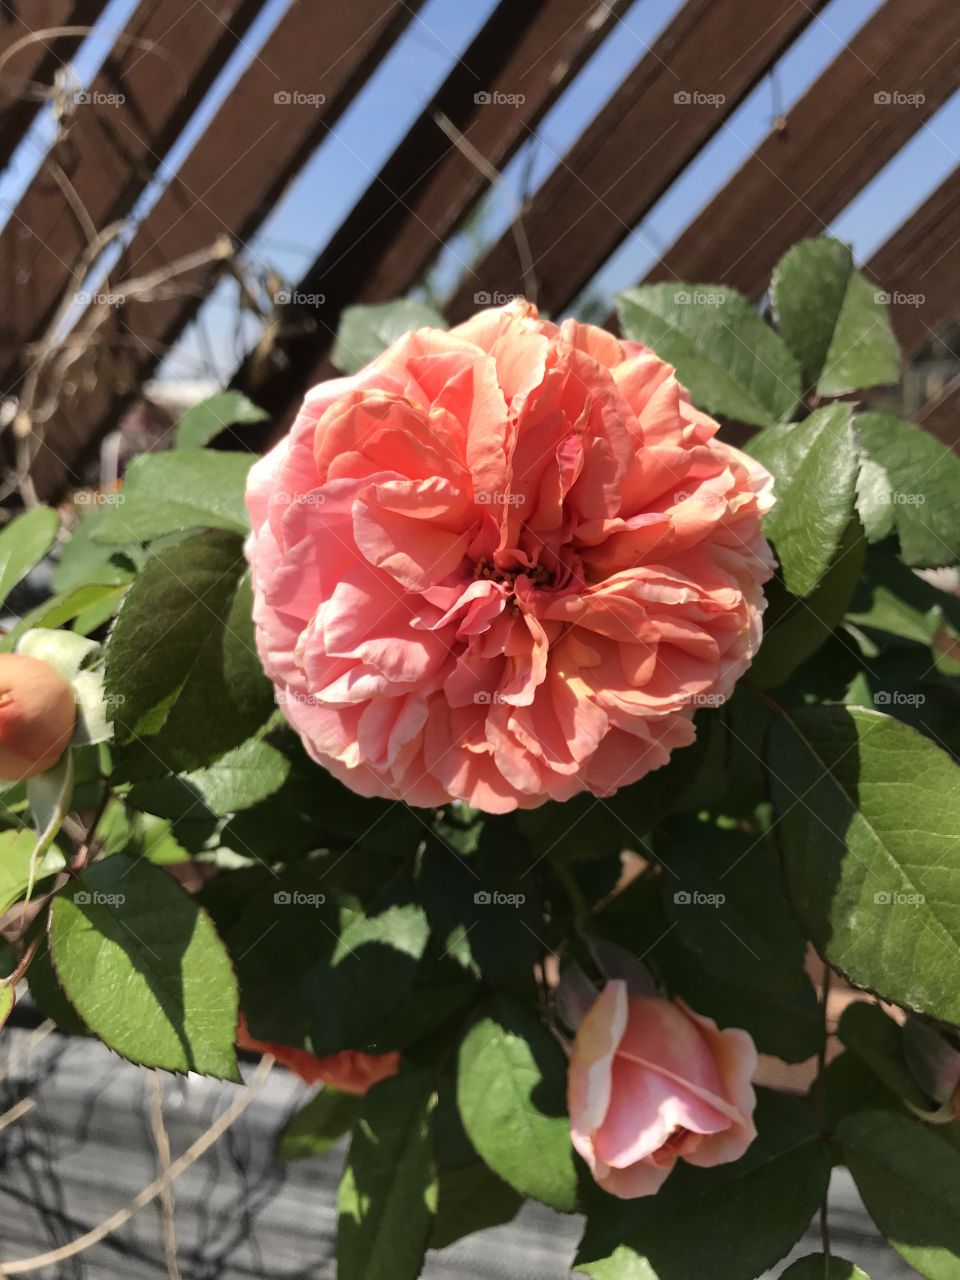 Peach coloured rose.